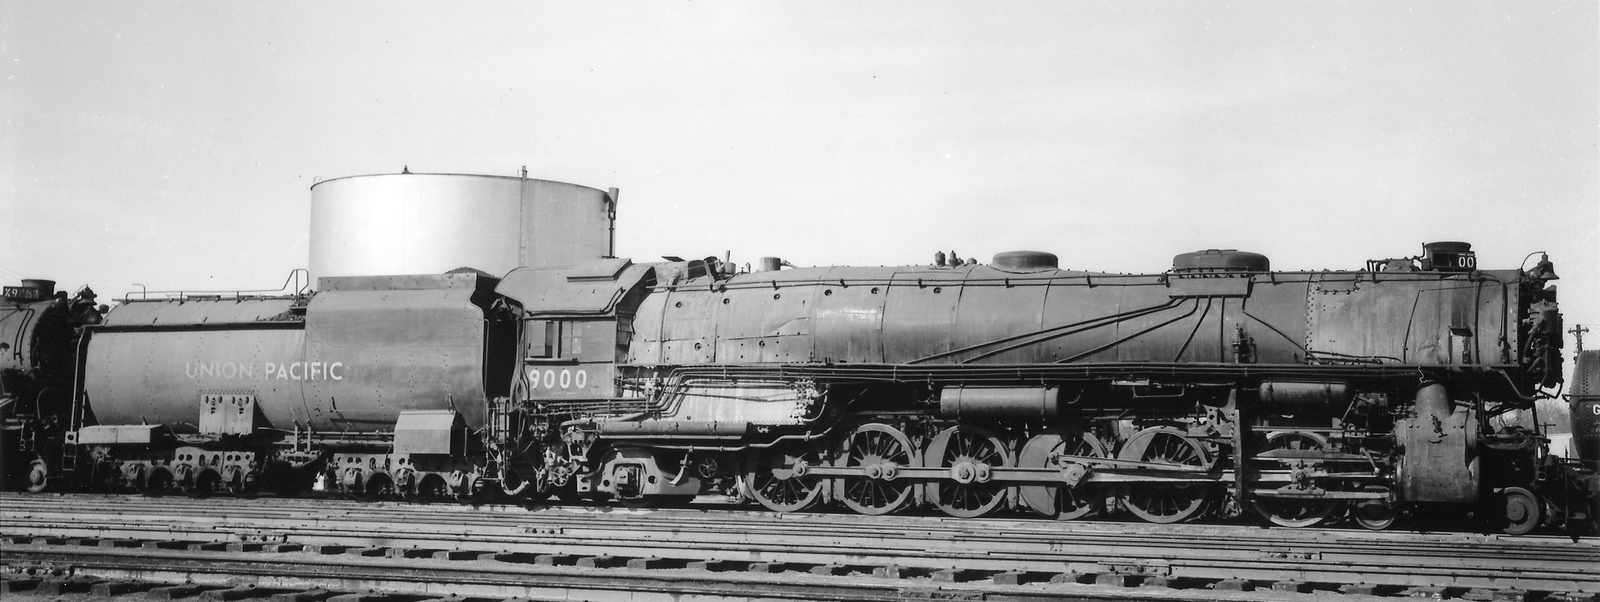 No. 9000 in March 1955 in North Platte, Nebraska